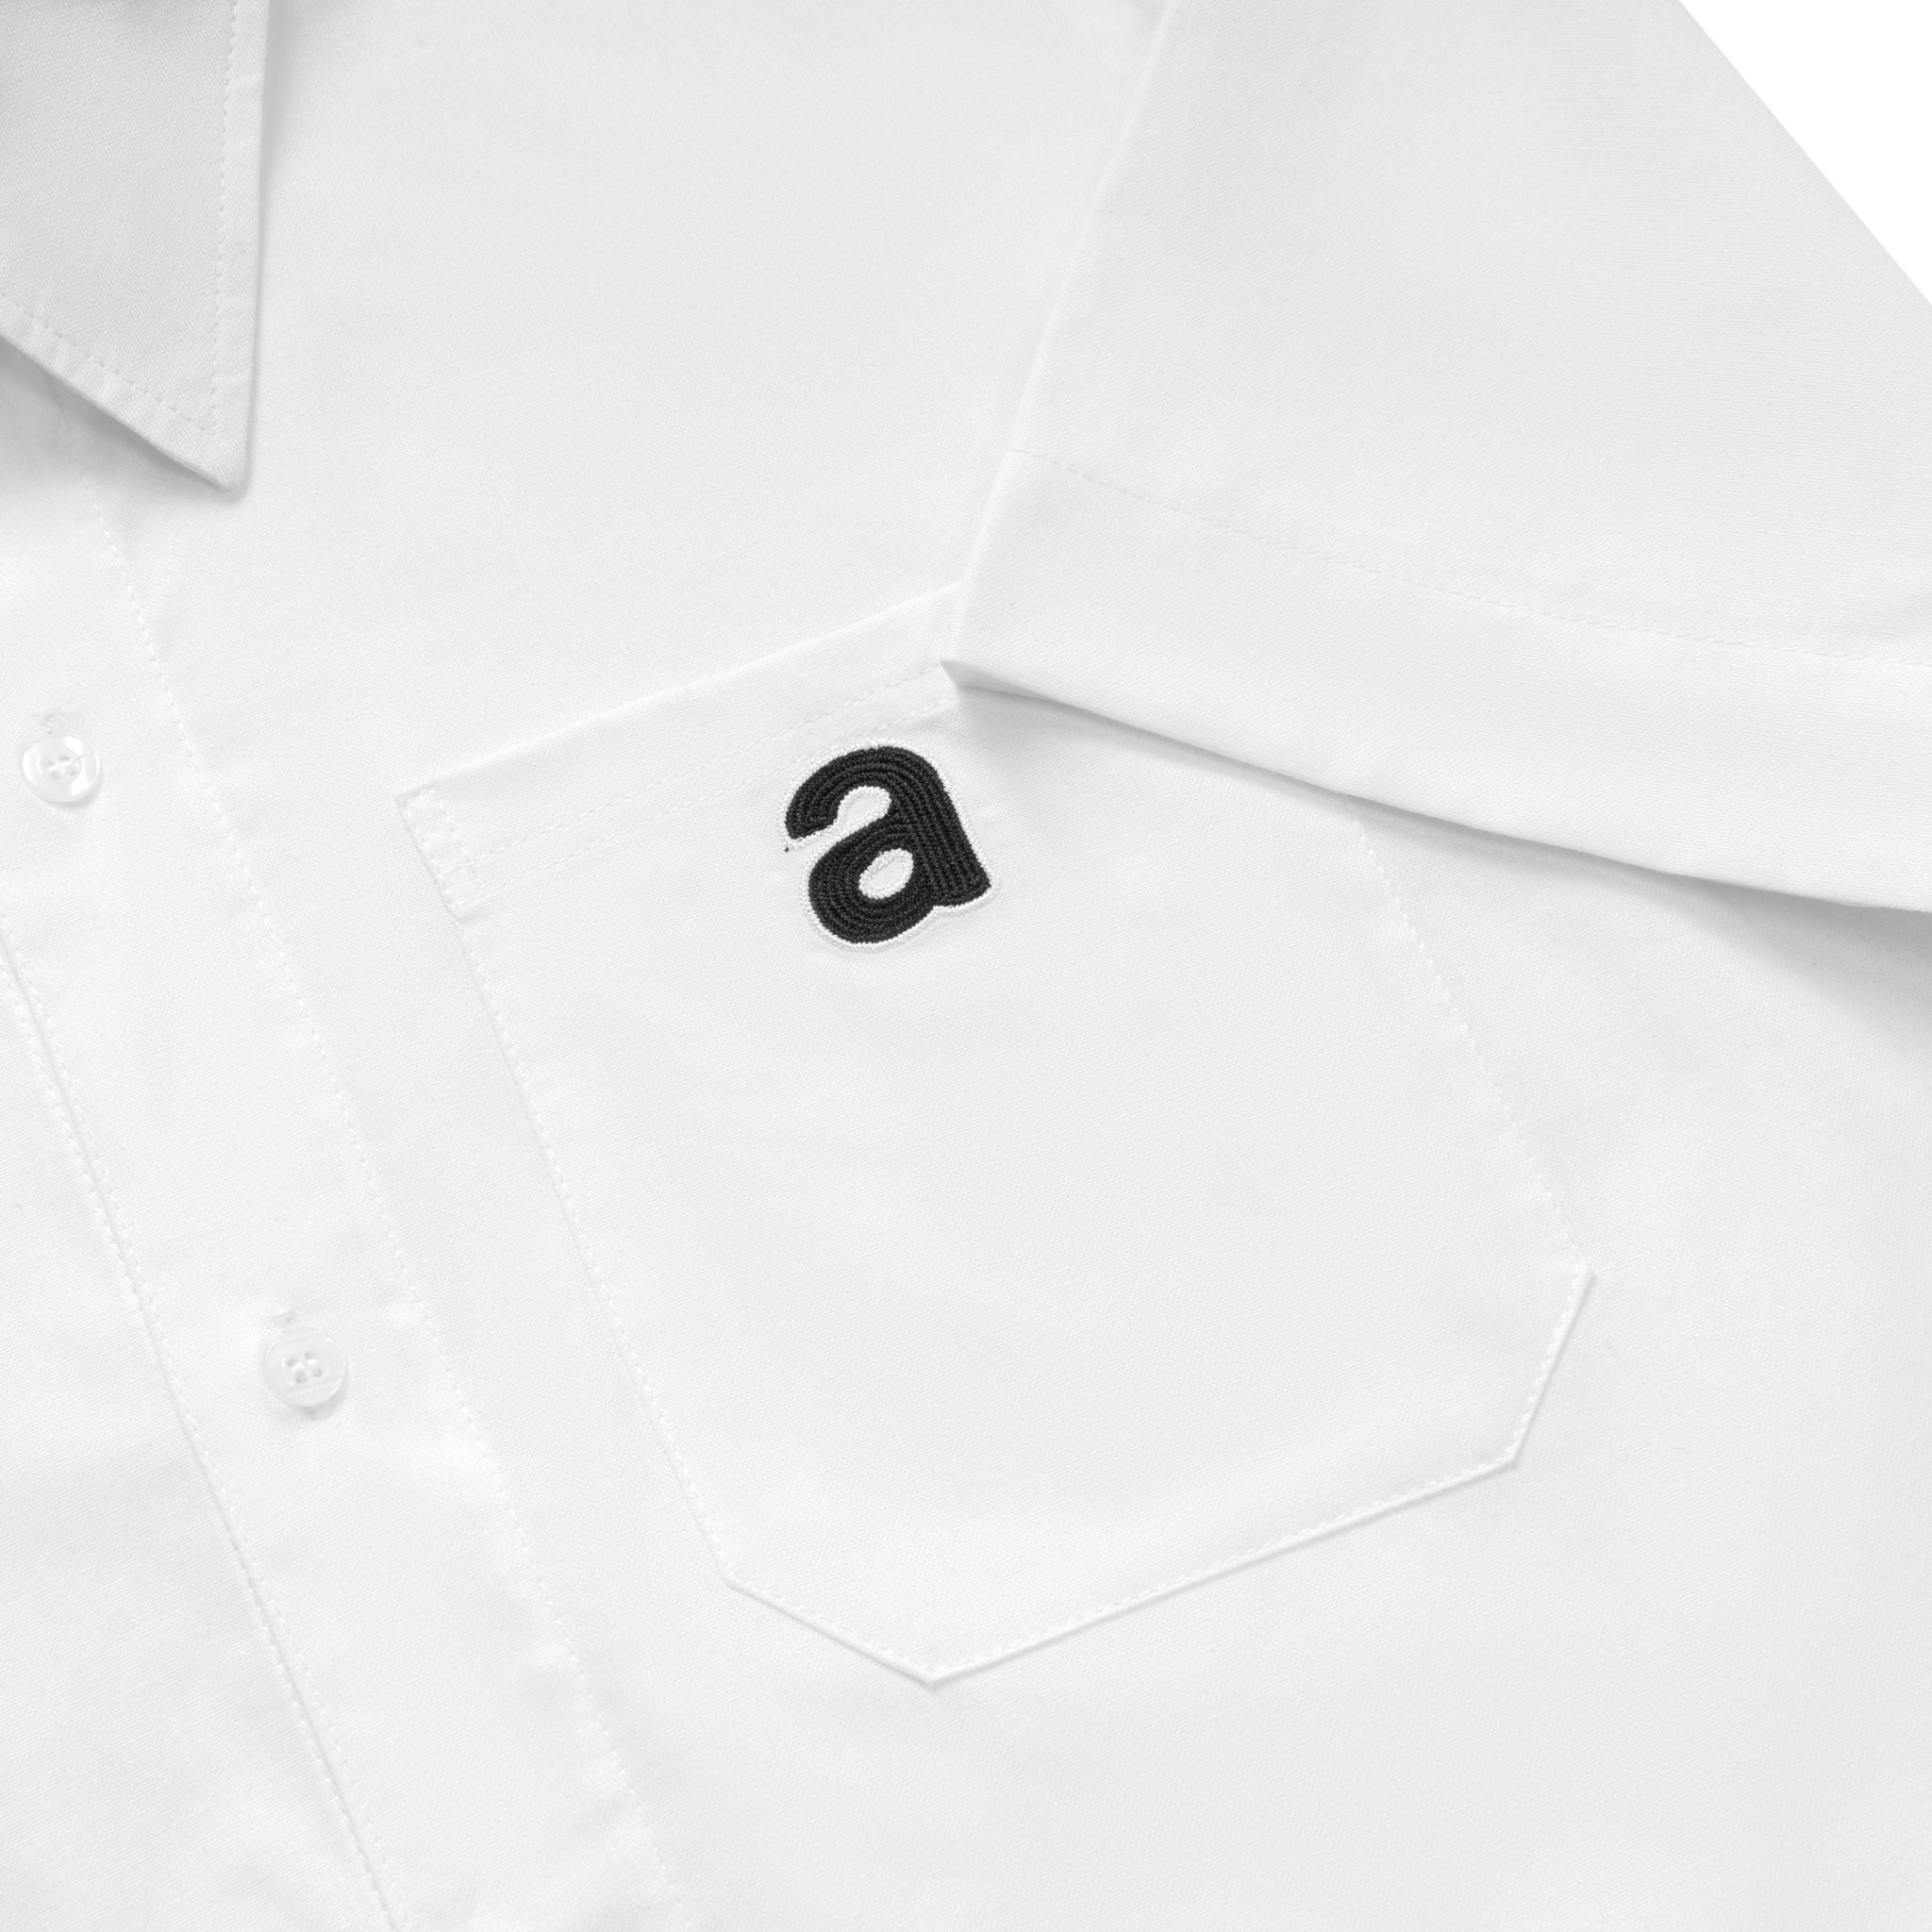  Premium Oxford Short Sleeves Shirt - White 